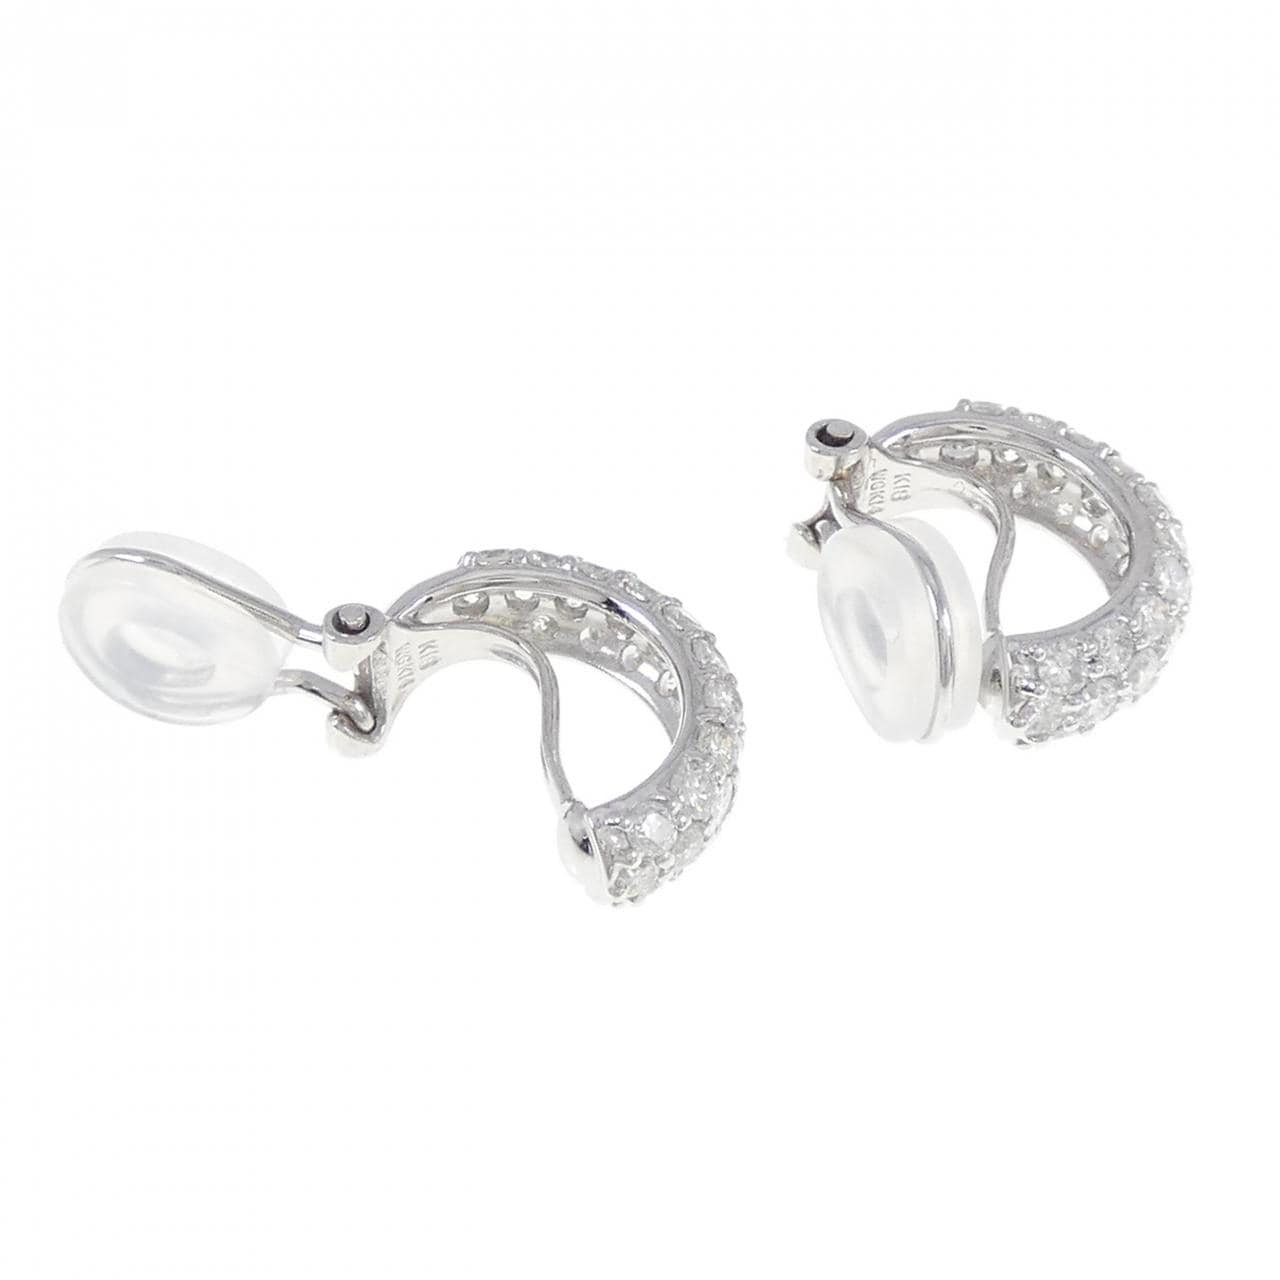 K18WG/K14WG Diamond earrings 2.20CT